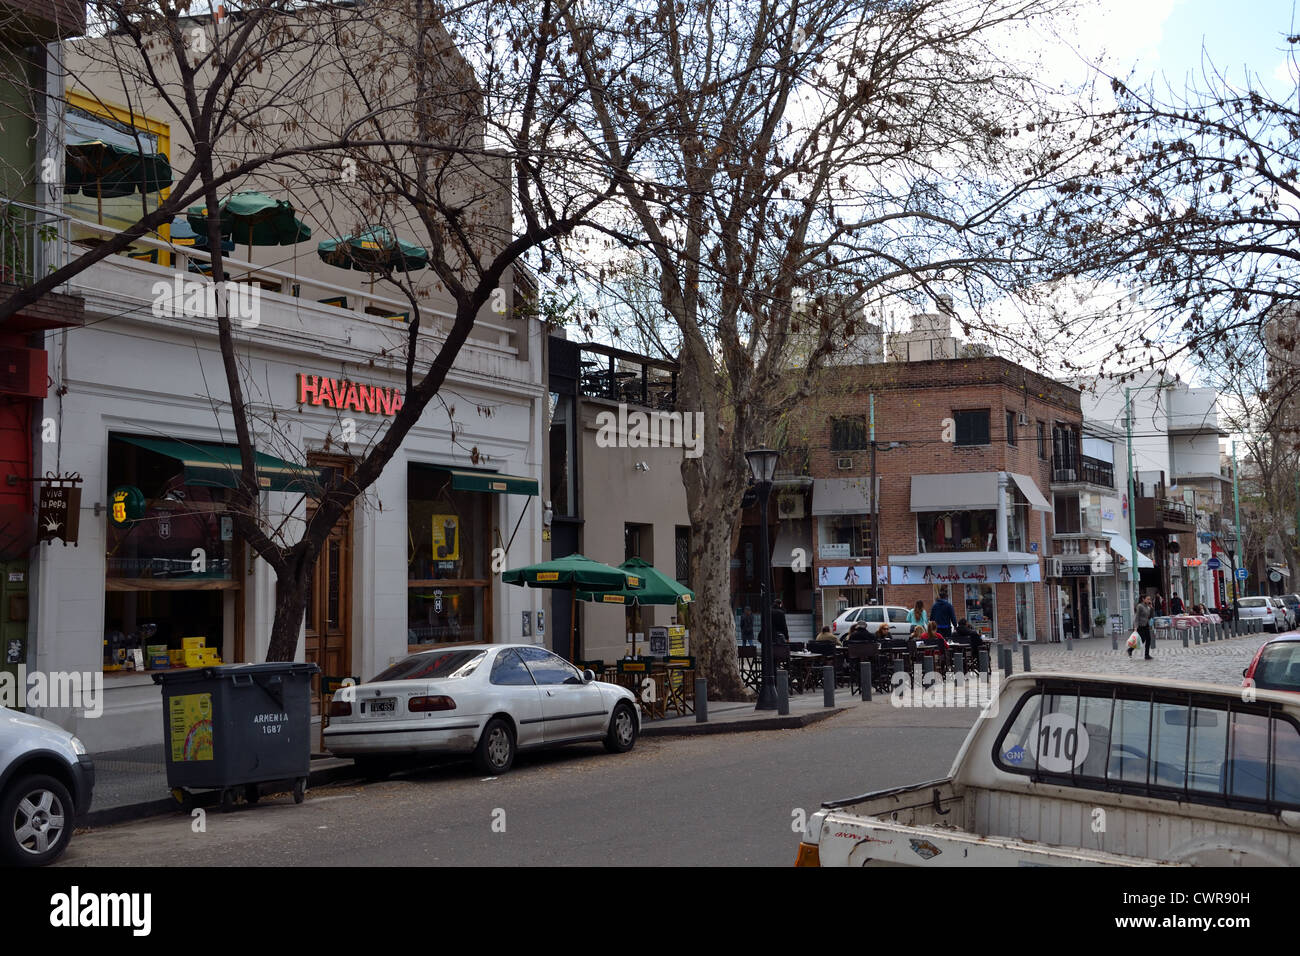 Havanna coffee-shop, Palermo Soho, Buenos Aires, Argentina. Stock Photo